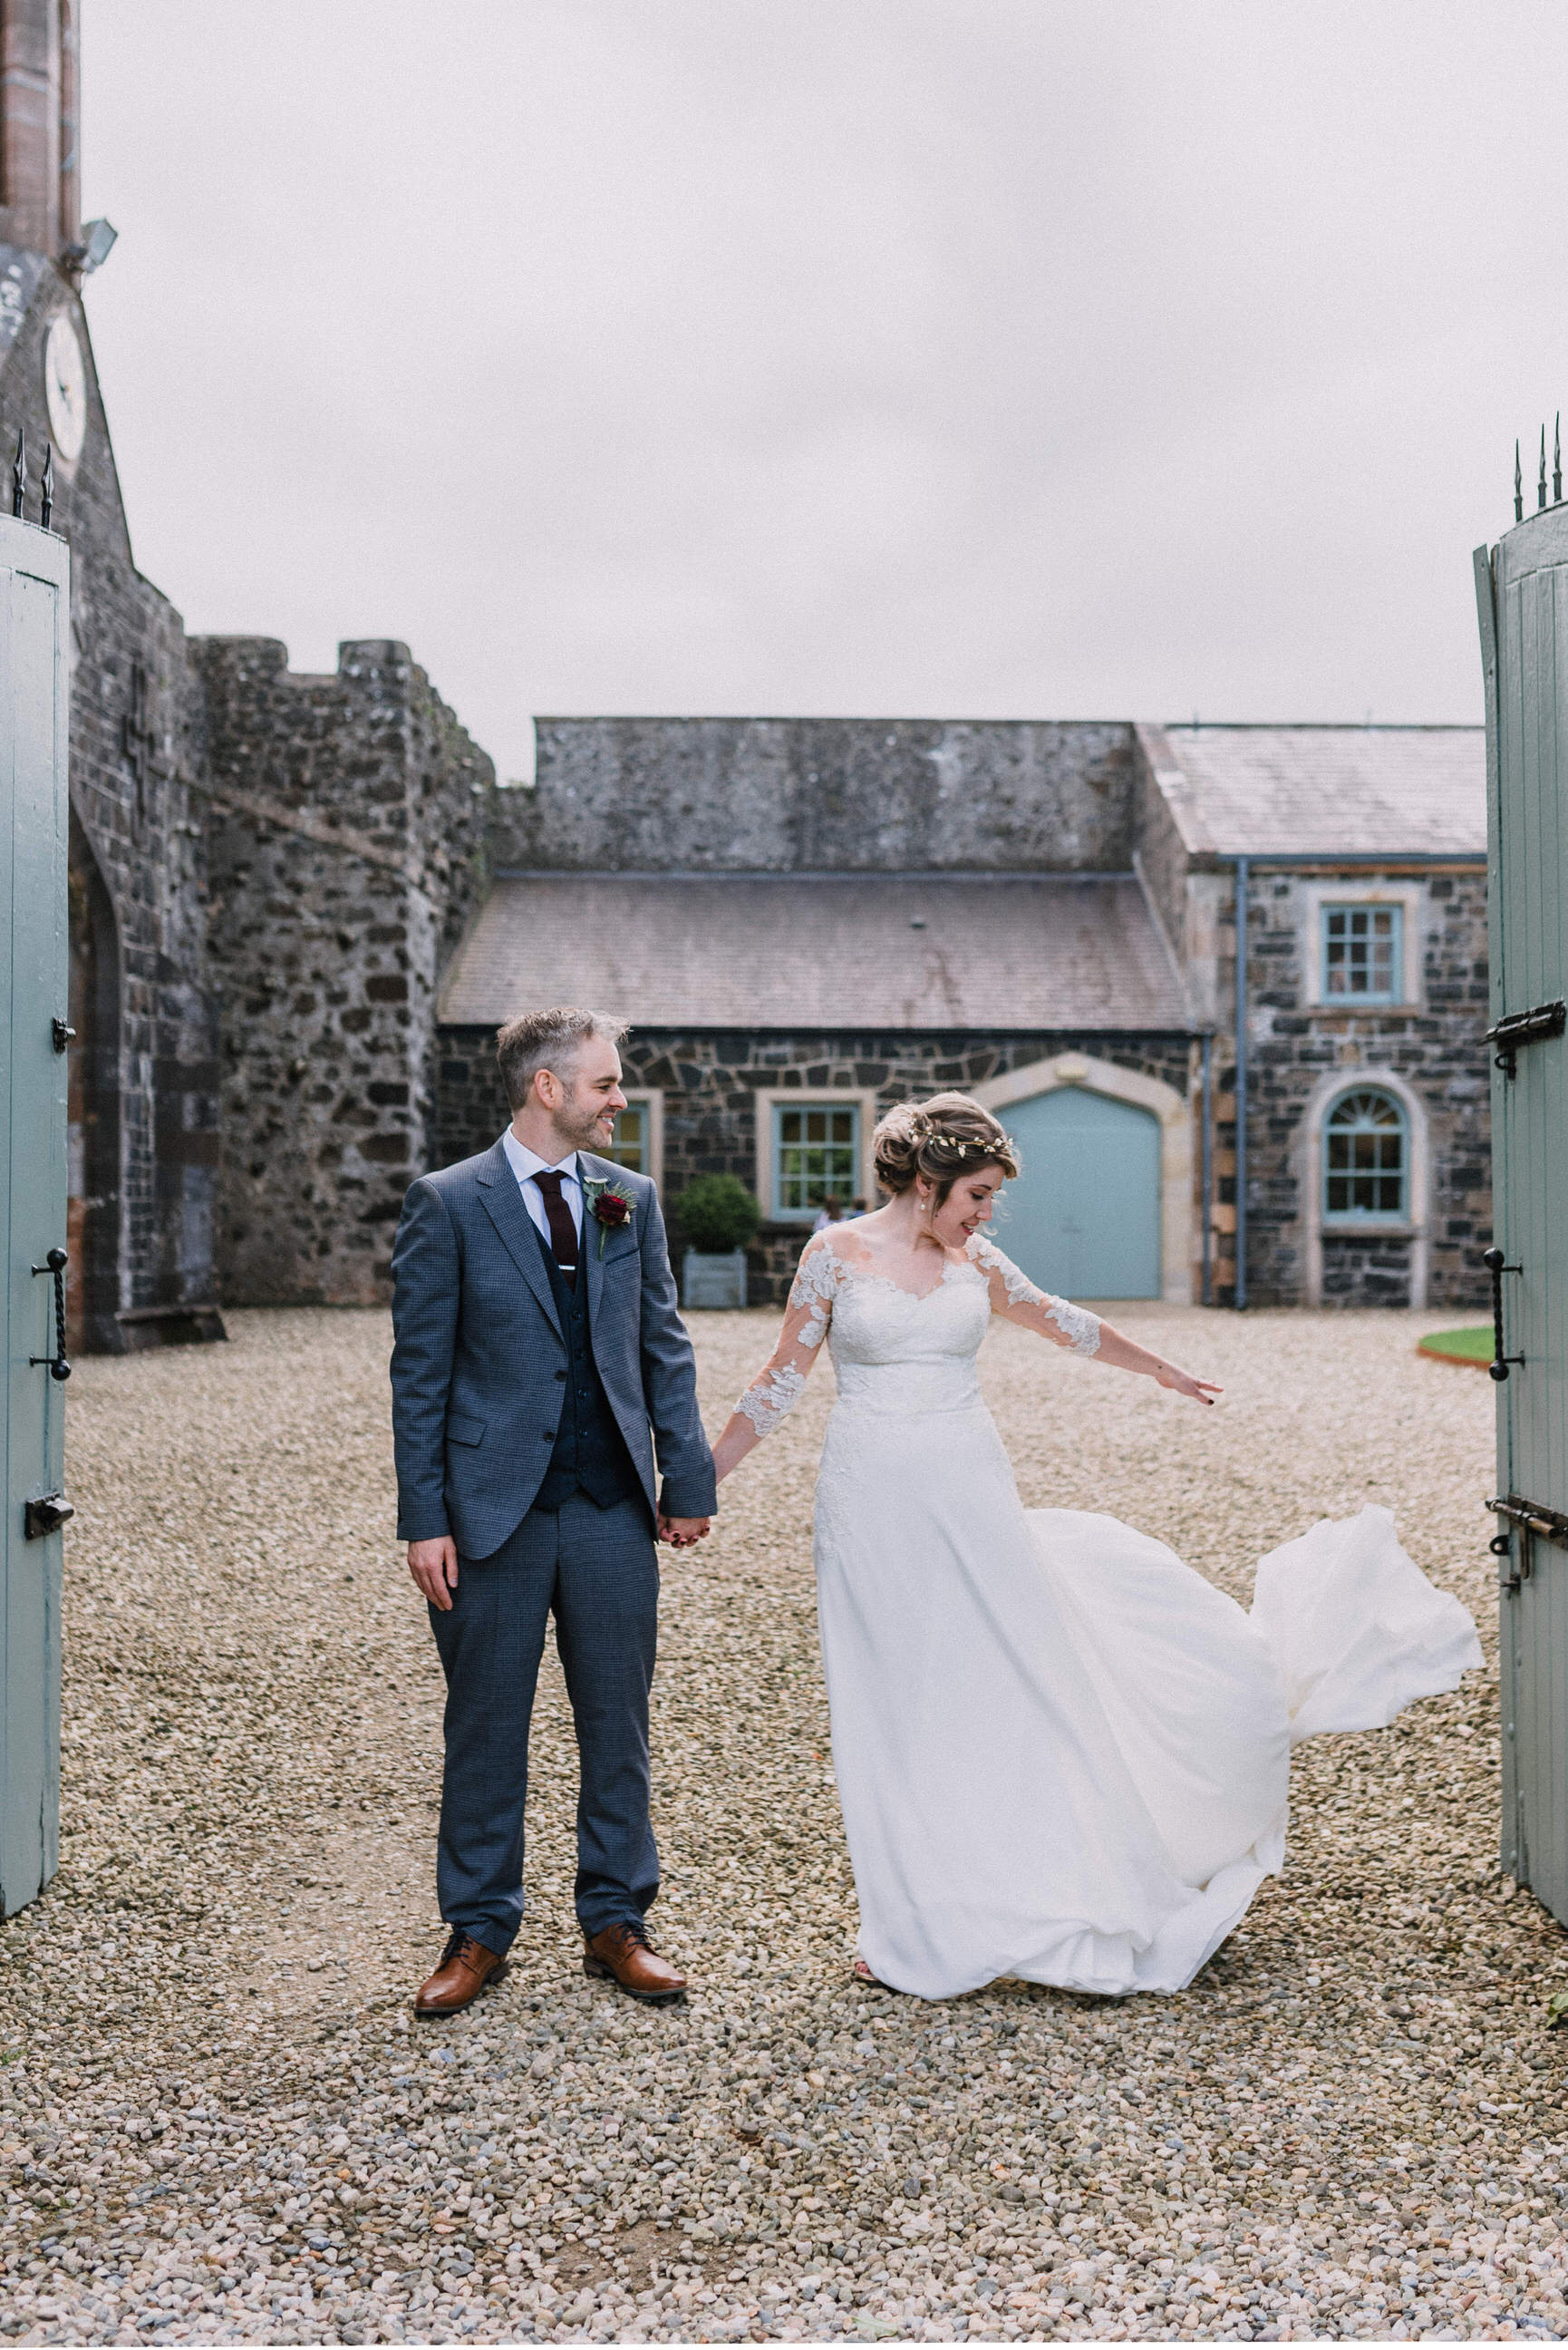 lissanoure castle wedding, northern ireland wedding photographer, romantic northern irish wedding venue, castle wedding ireland, natural wedding photography ni (89).jpg